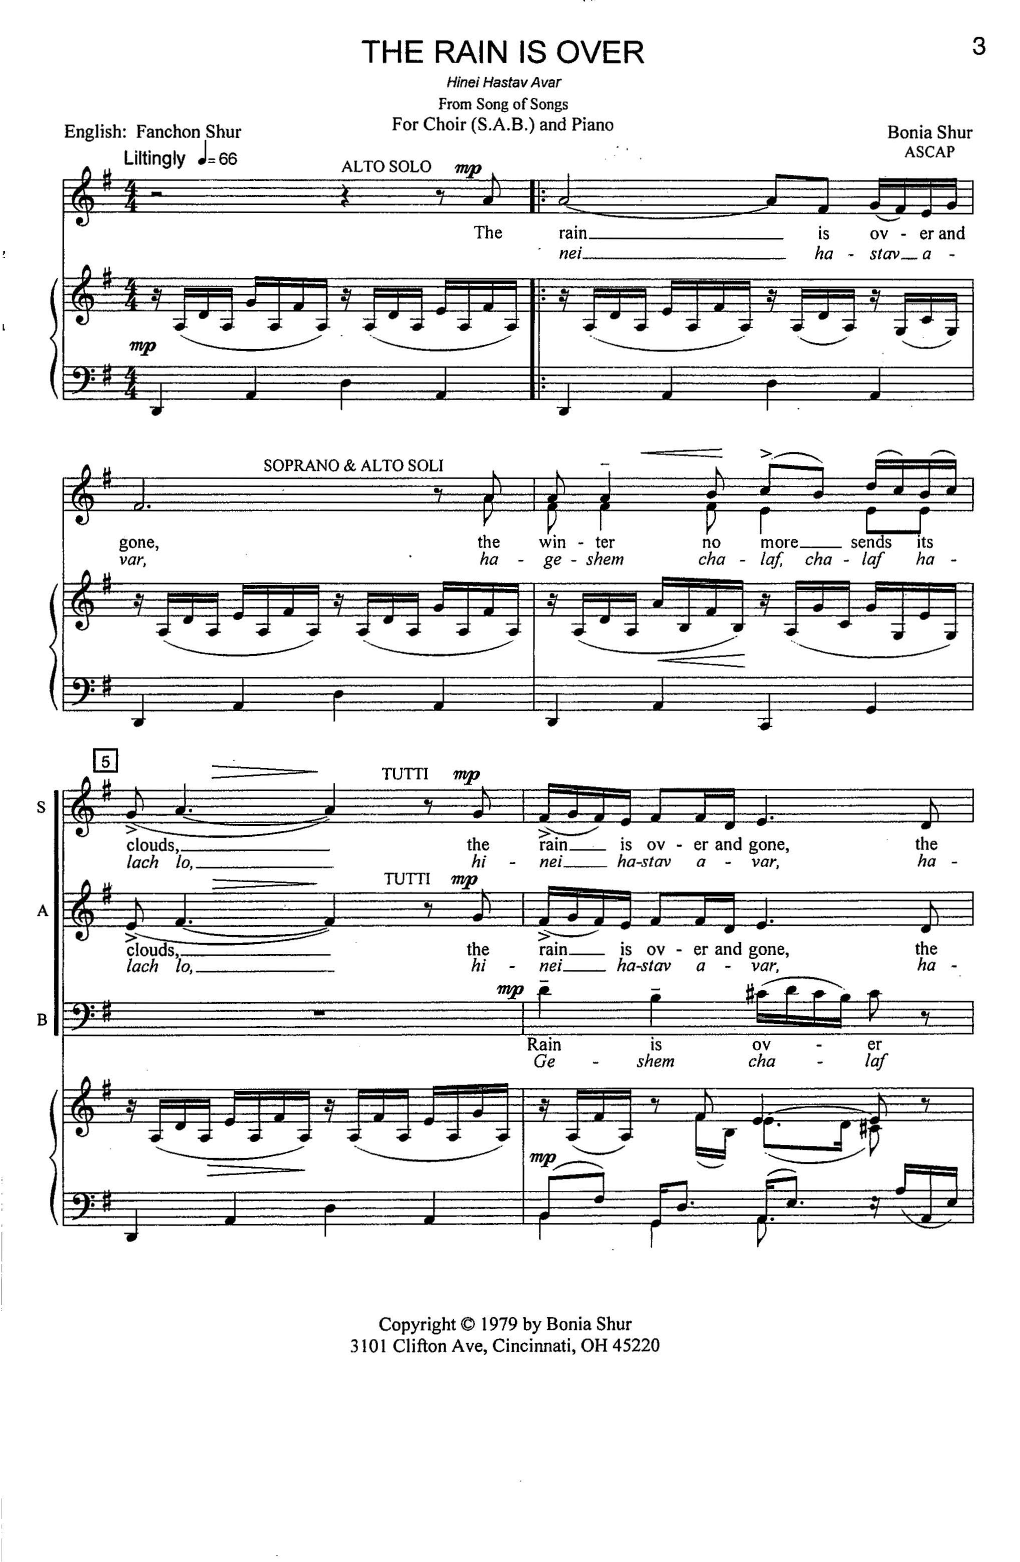 Bonia Shur The Rain Is Over Sheet Music Notes & Chords for SAB Choir - Download or Print PDF